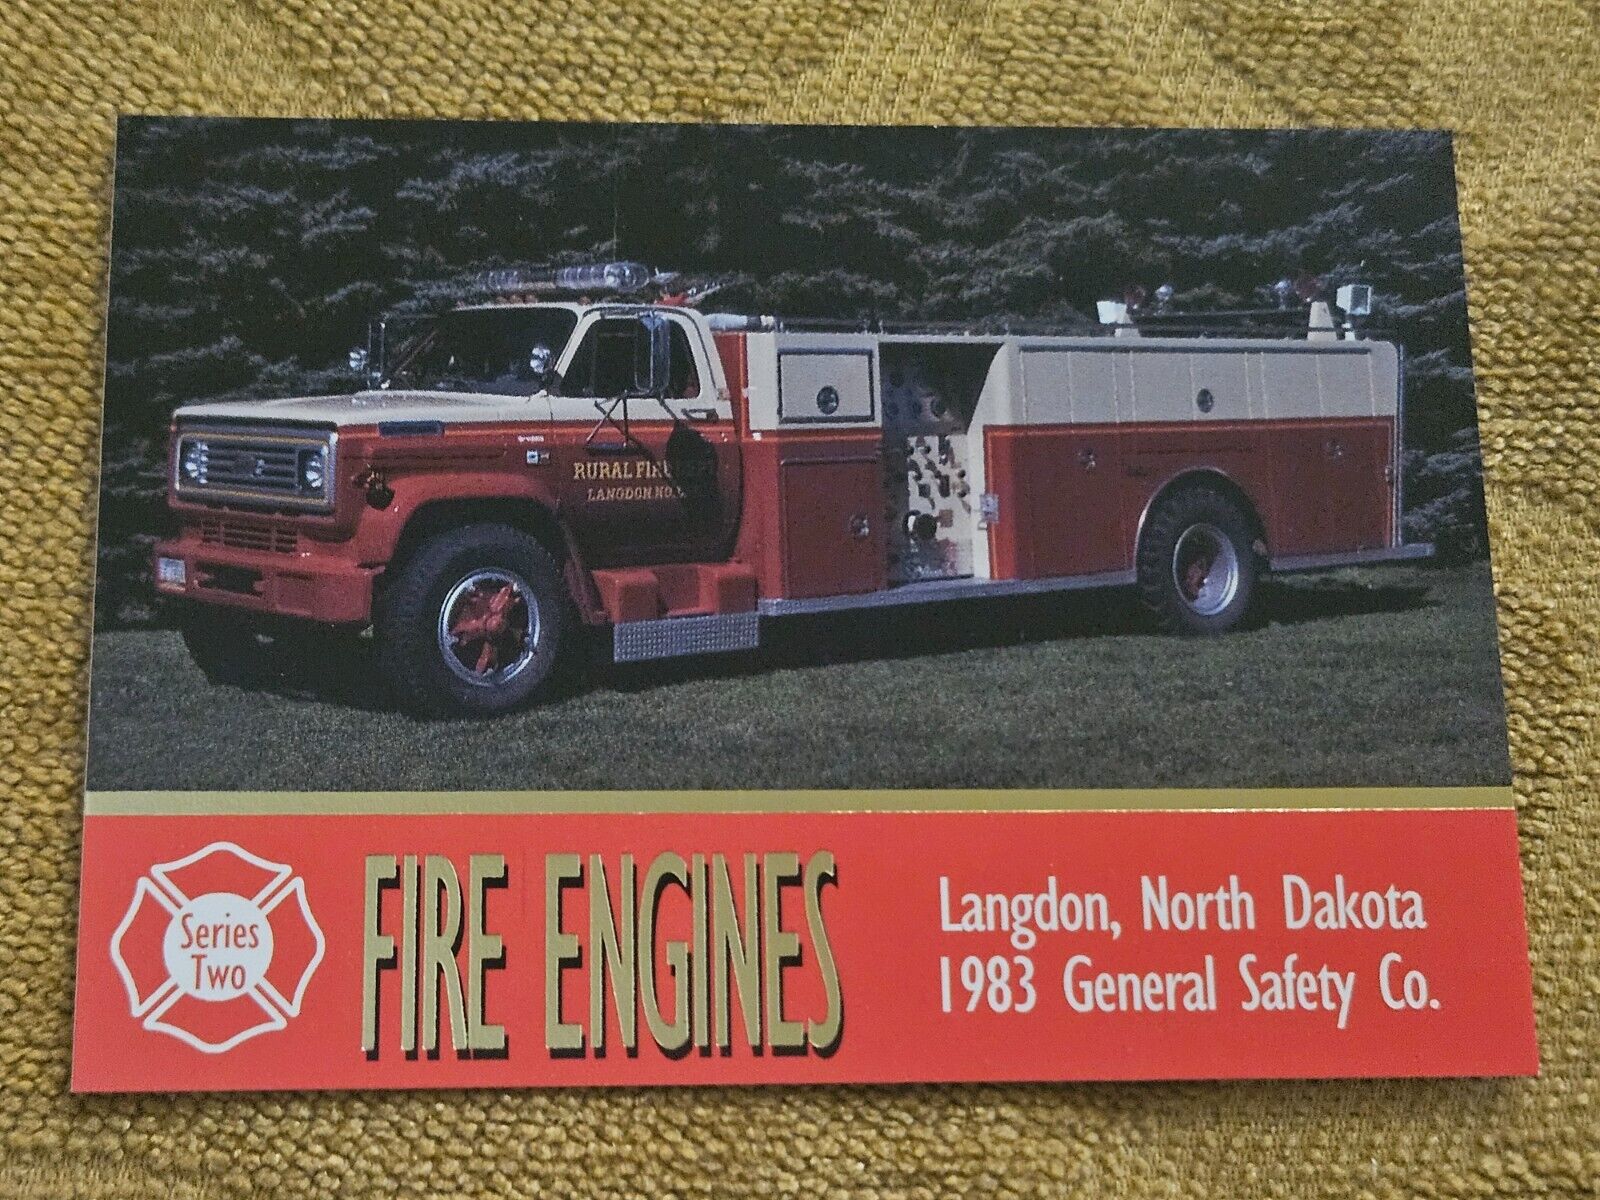 1993 Fire Engines Series 2 #146 Langdon, North Dakota 1983 General Safety Co.